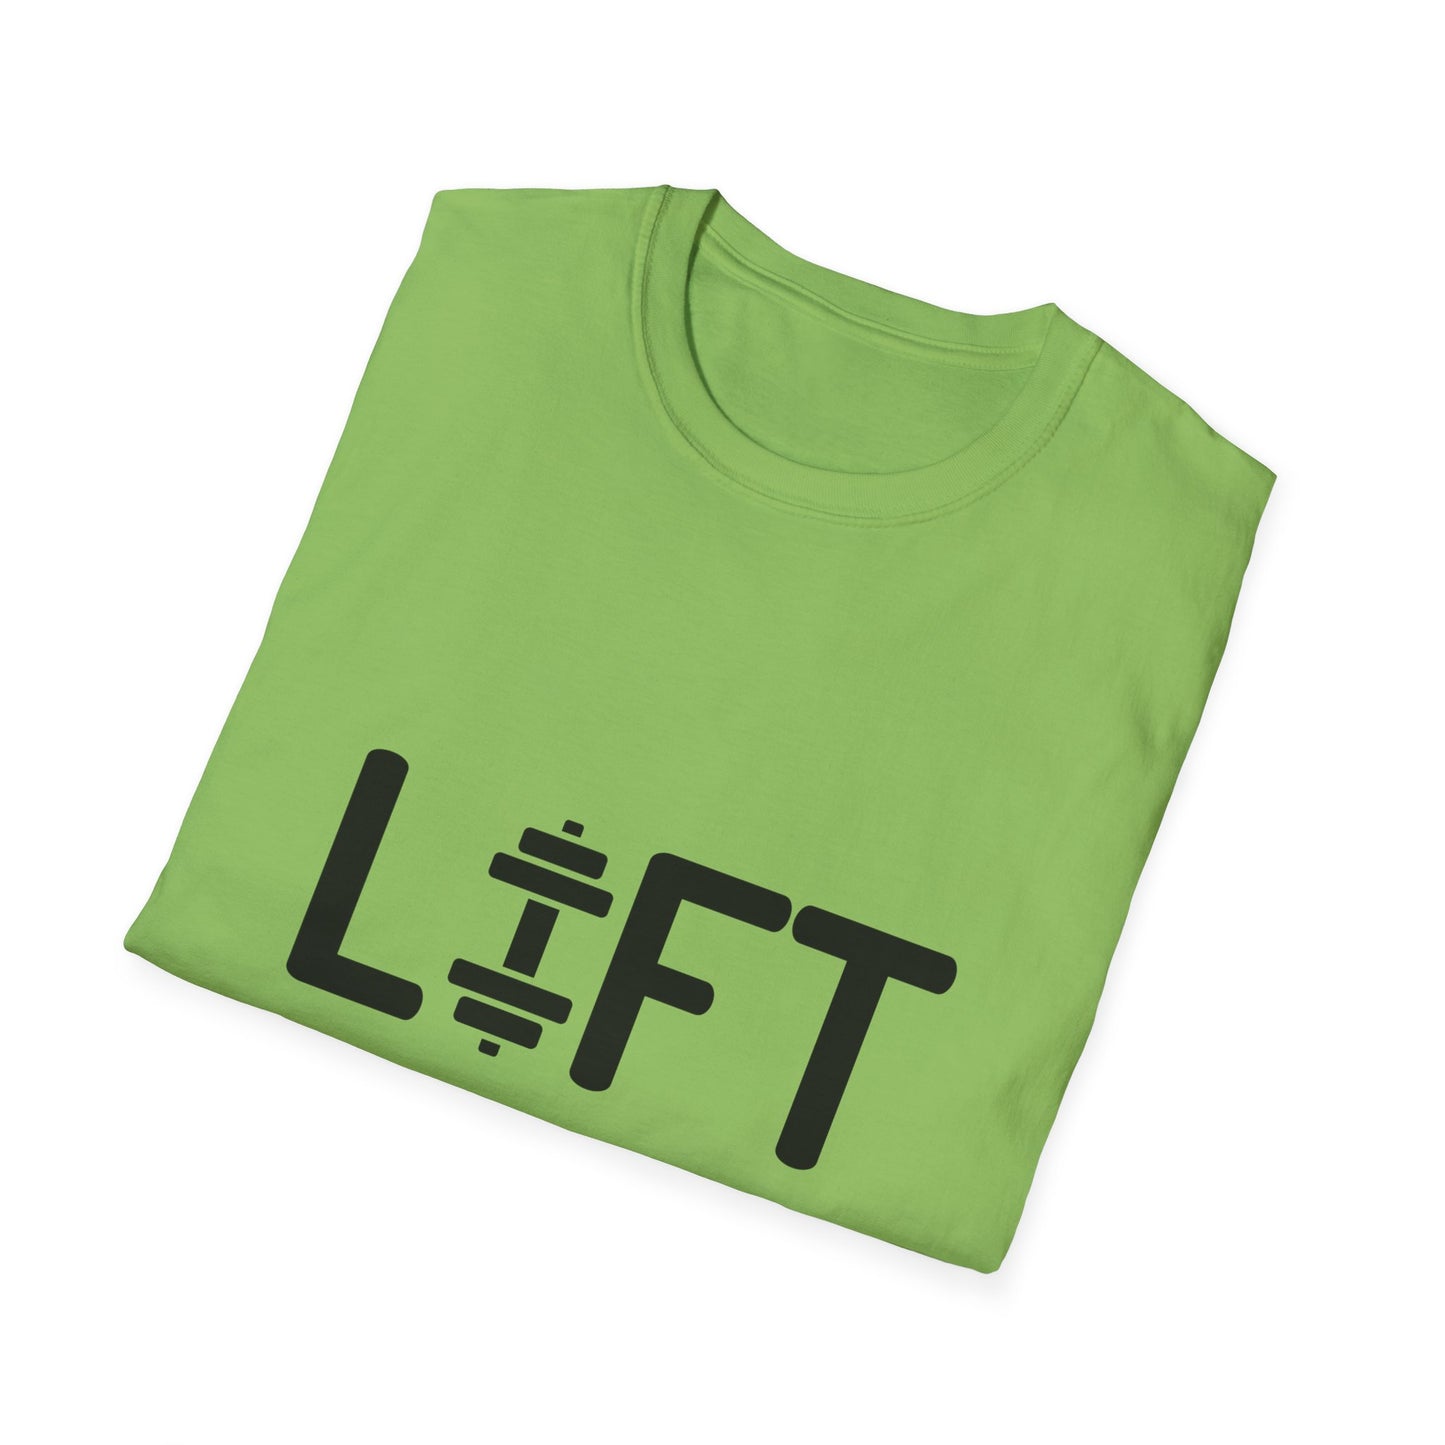 Matchin Gym. Shirt for Men and Women -Unisex Softstyle T-Shirt